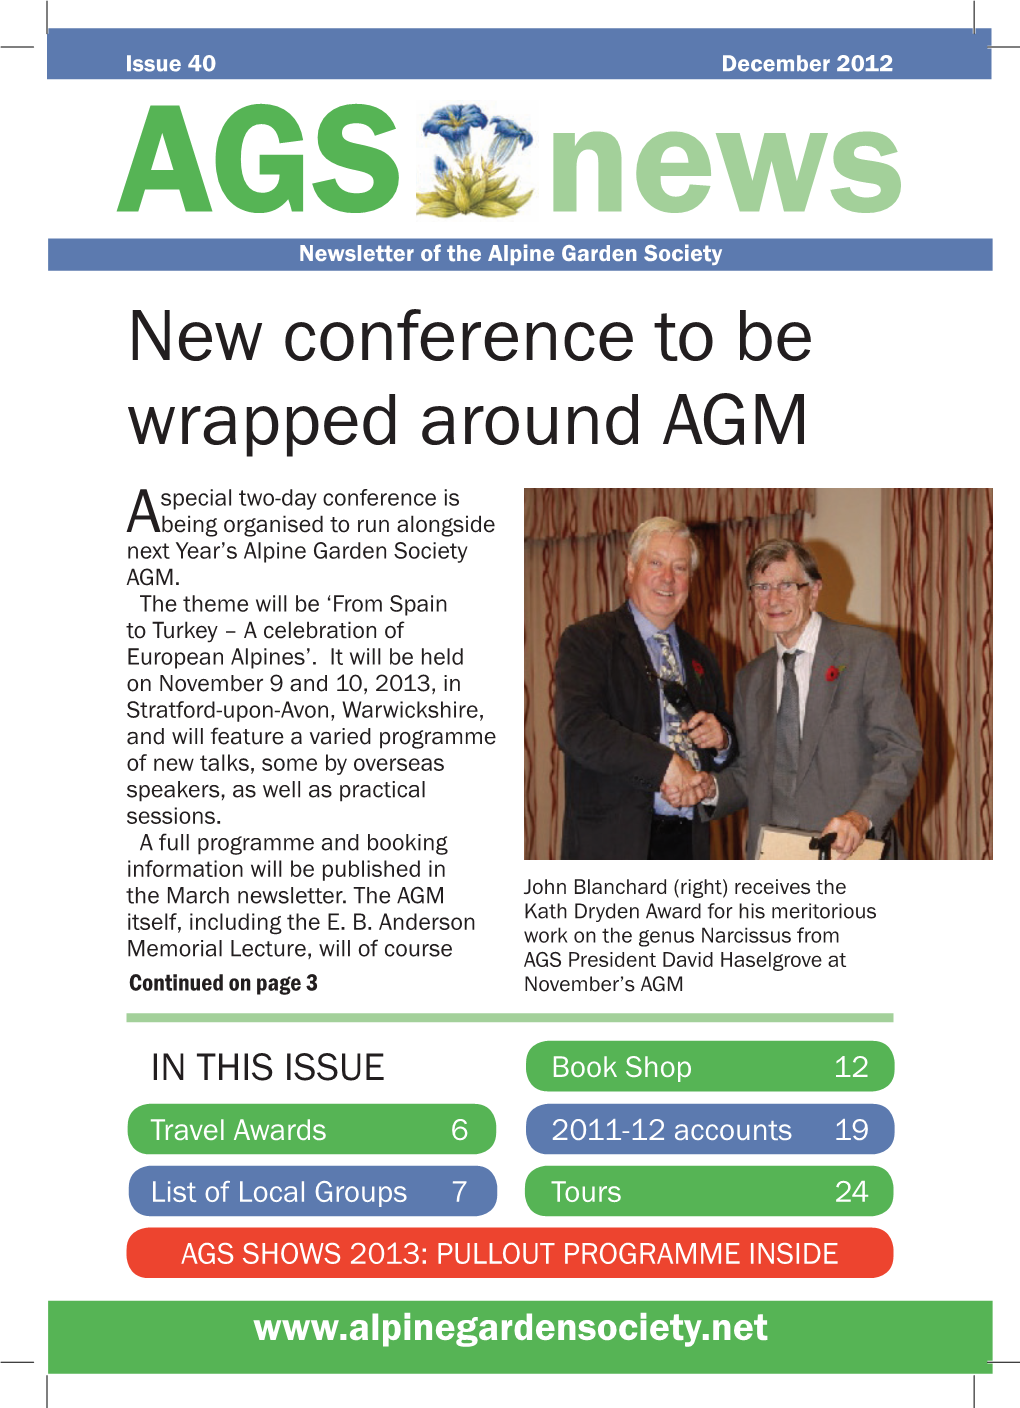 AGS News, December 2012